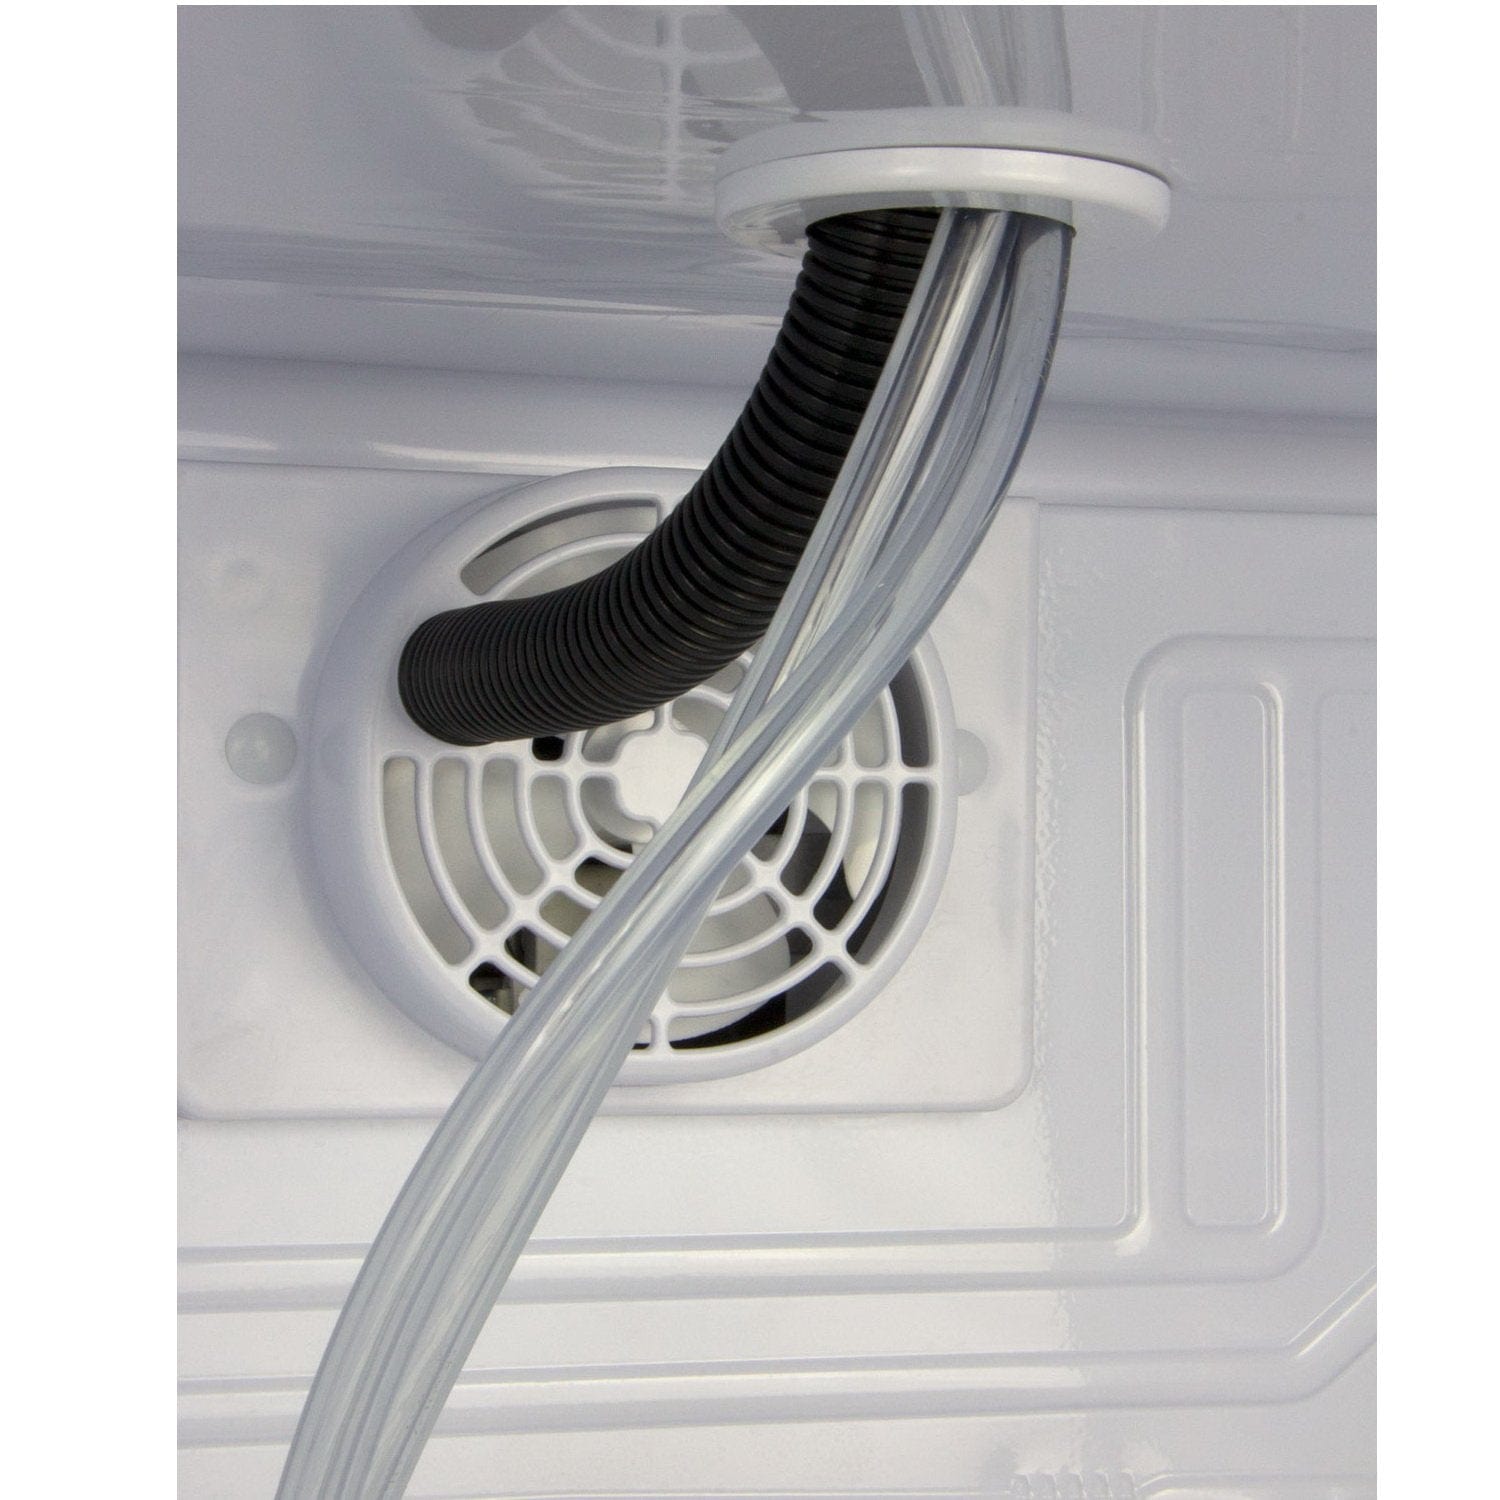 Kegco Single Tap Faucet Full Size Commercial Grade Digital Kegerator